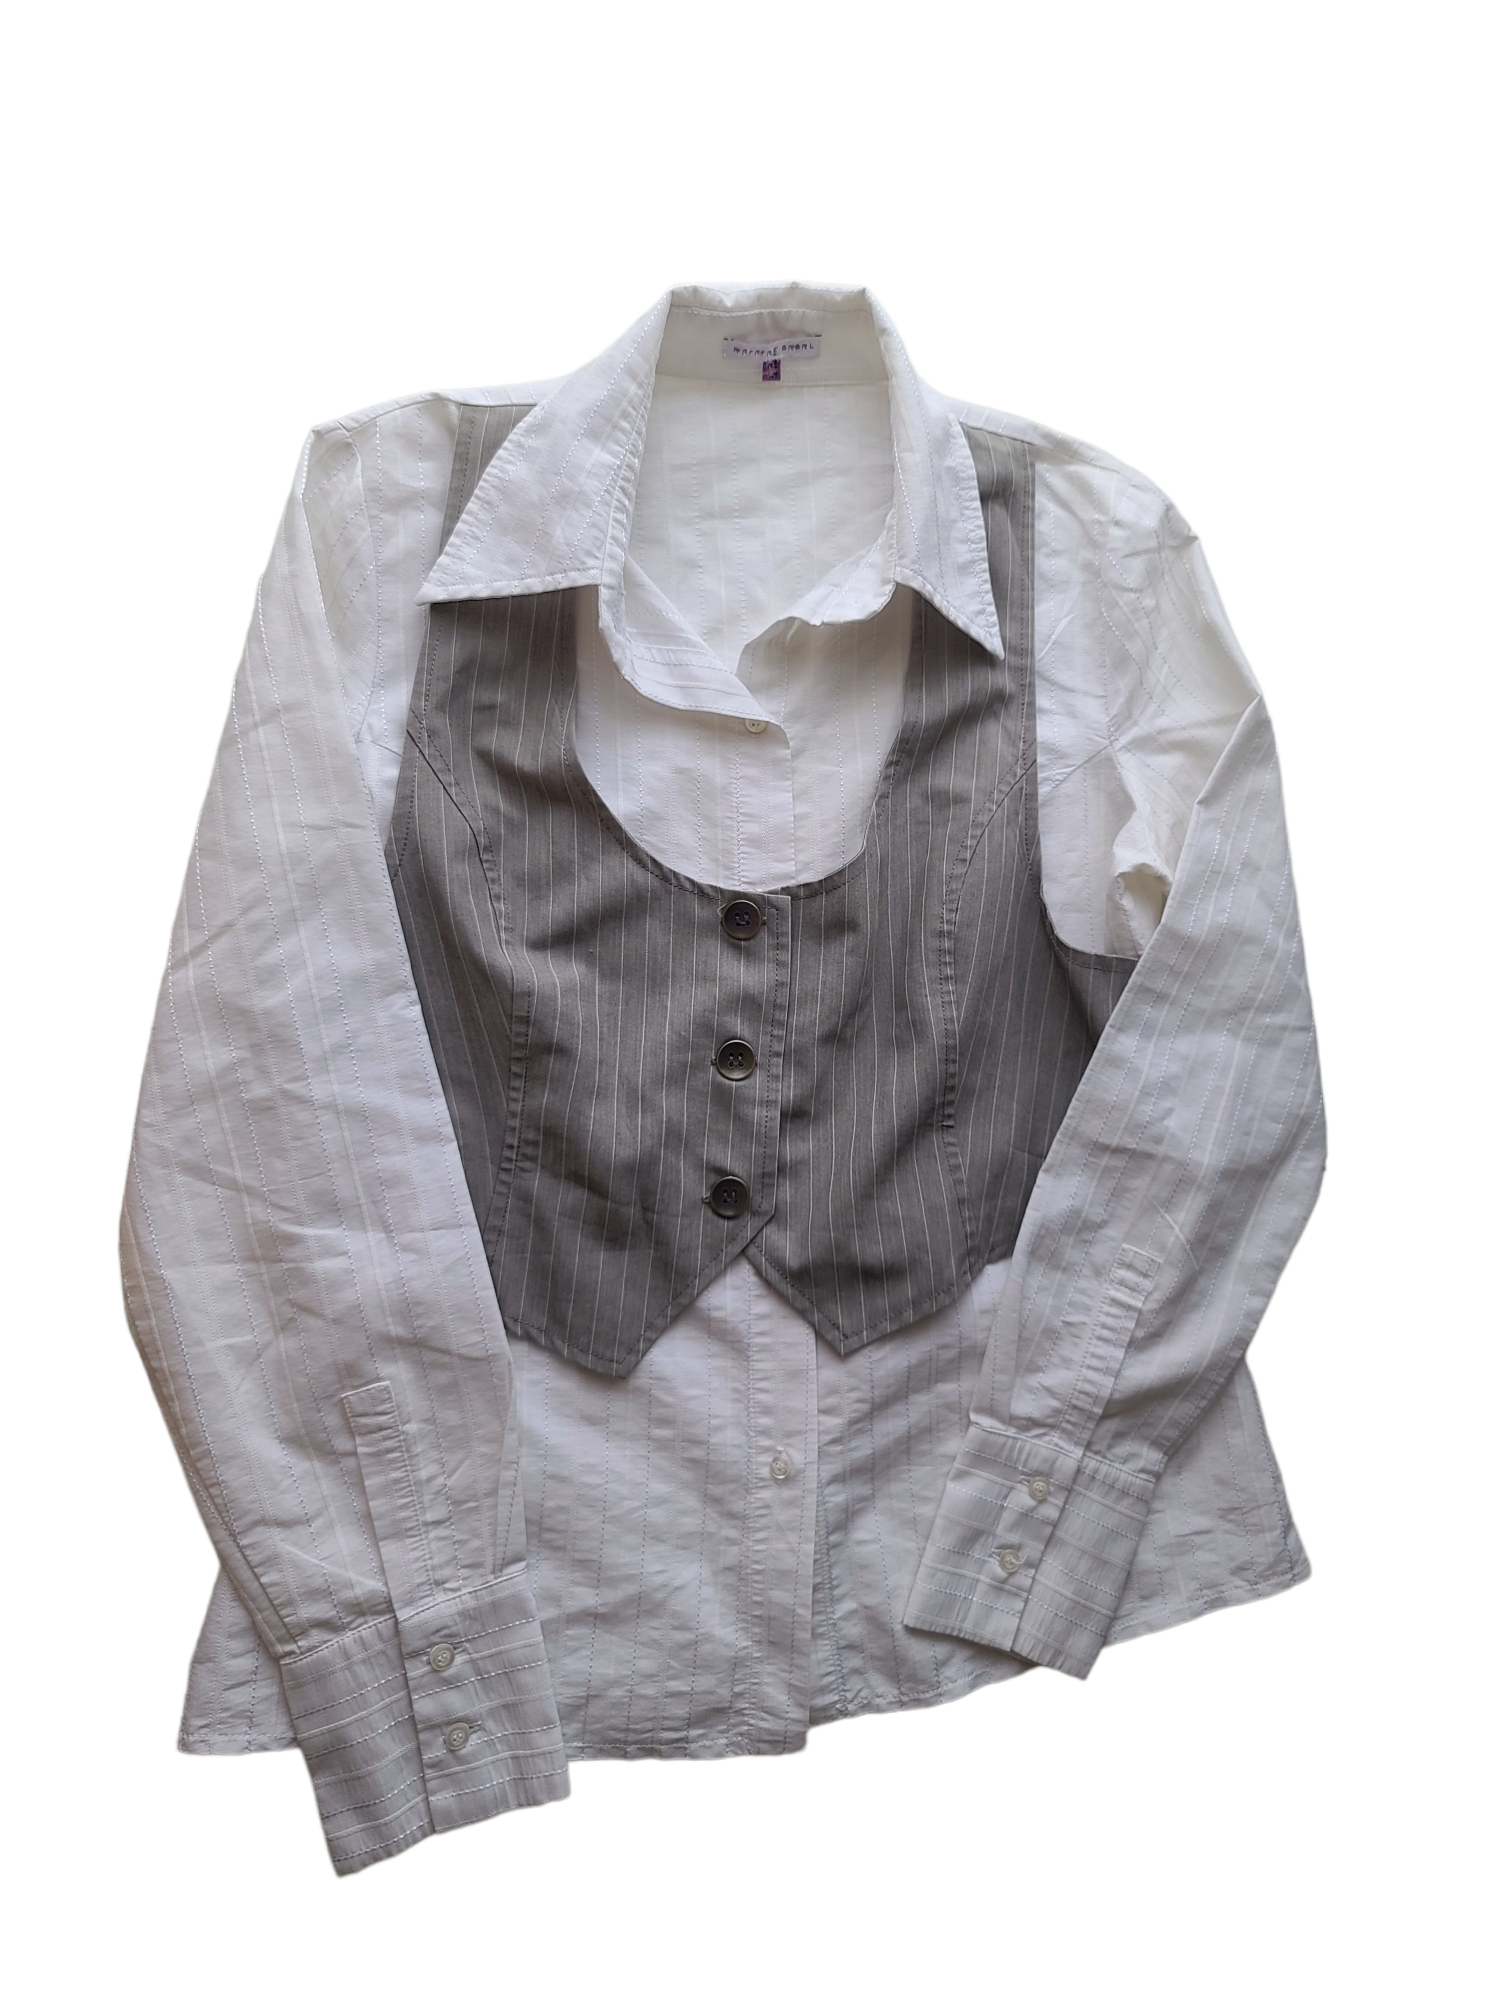 Harajuku cybery2k top vintage chemise y2k shirt 